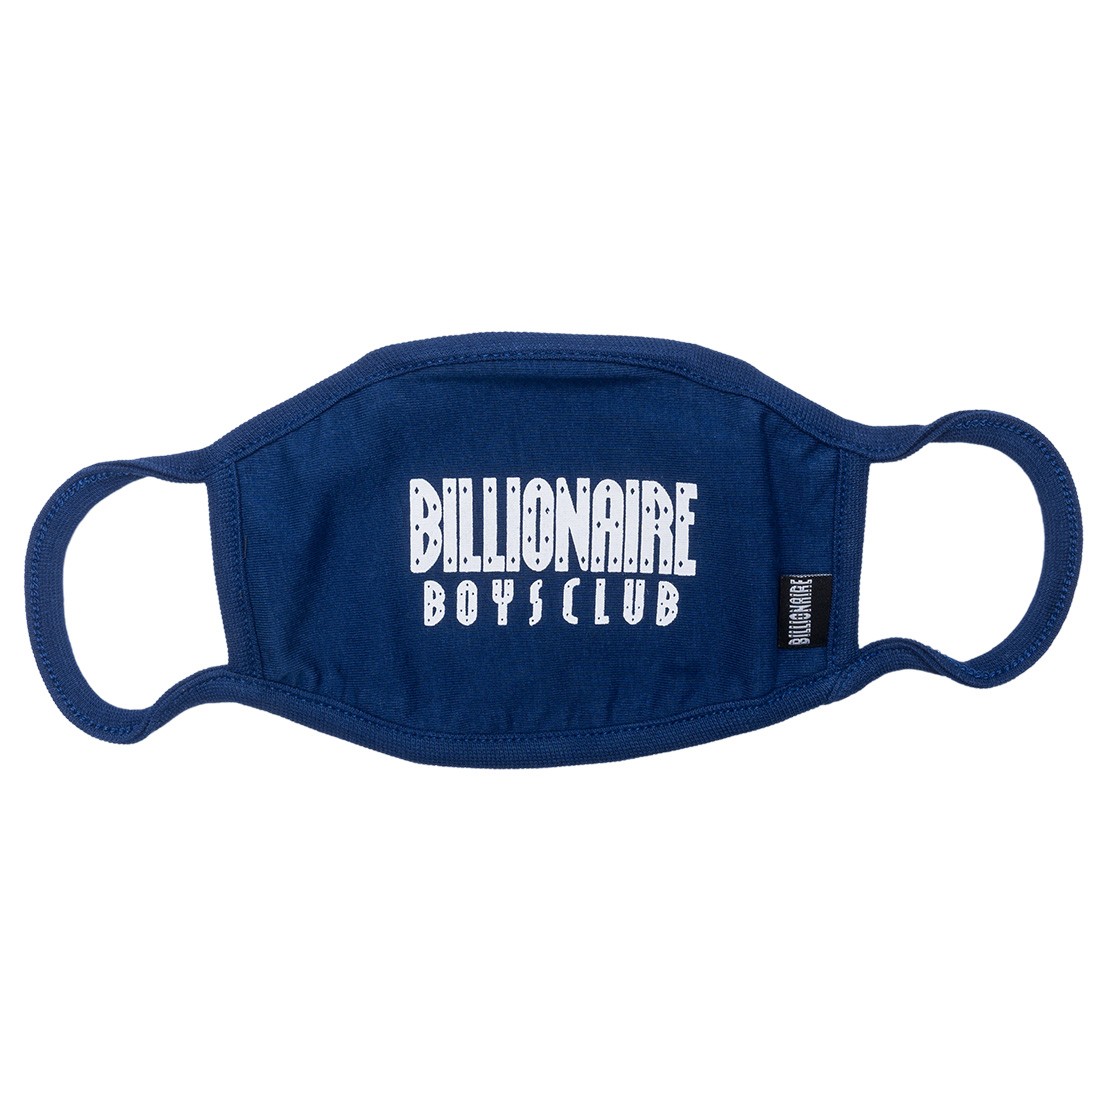 Billionaire Boys Club Large Millionaire Cream mask (blue)